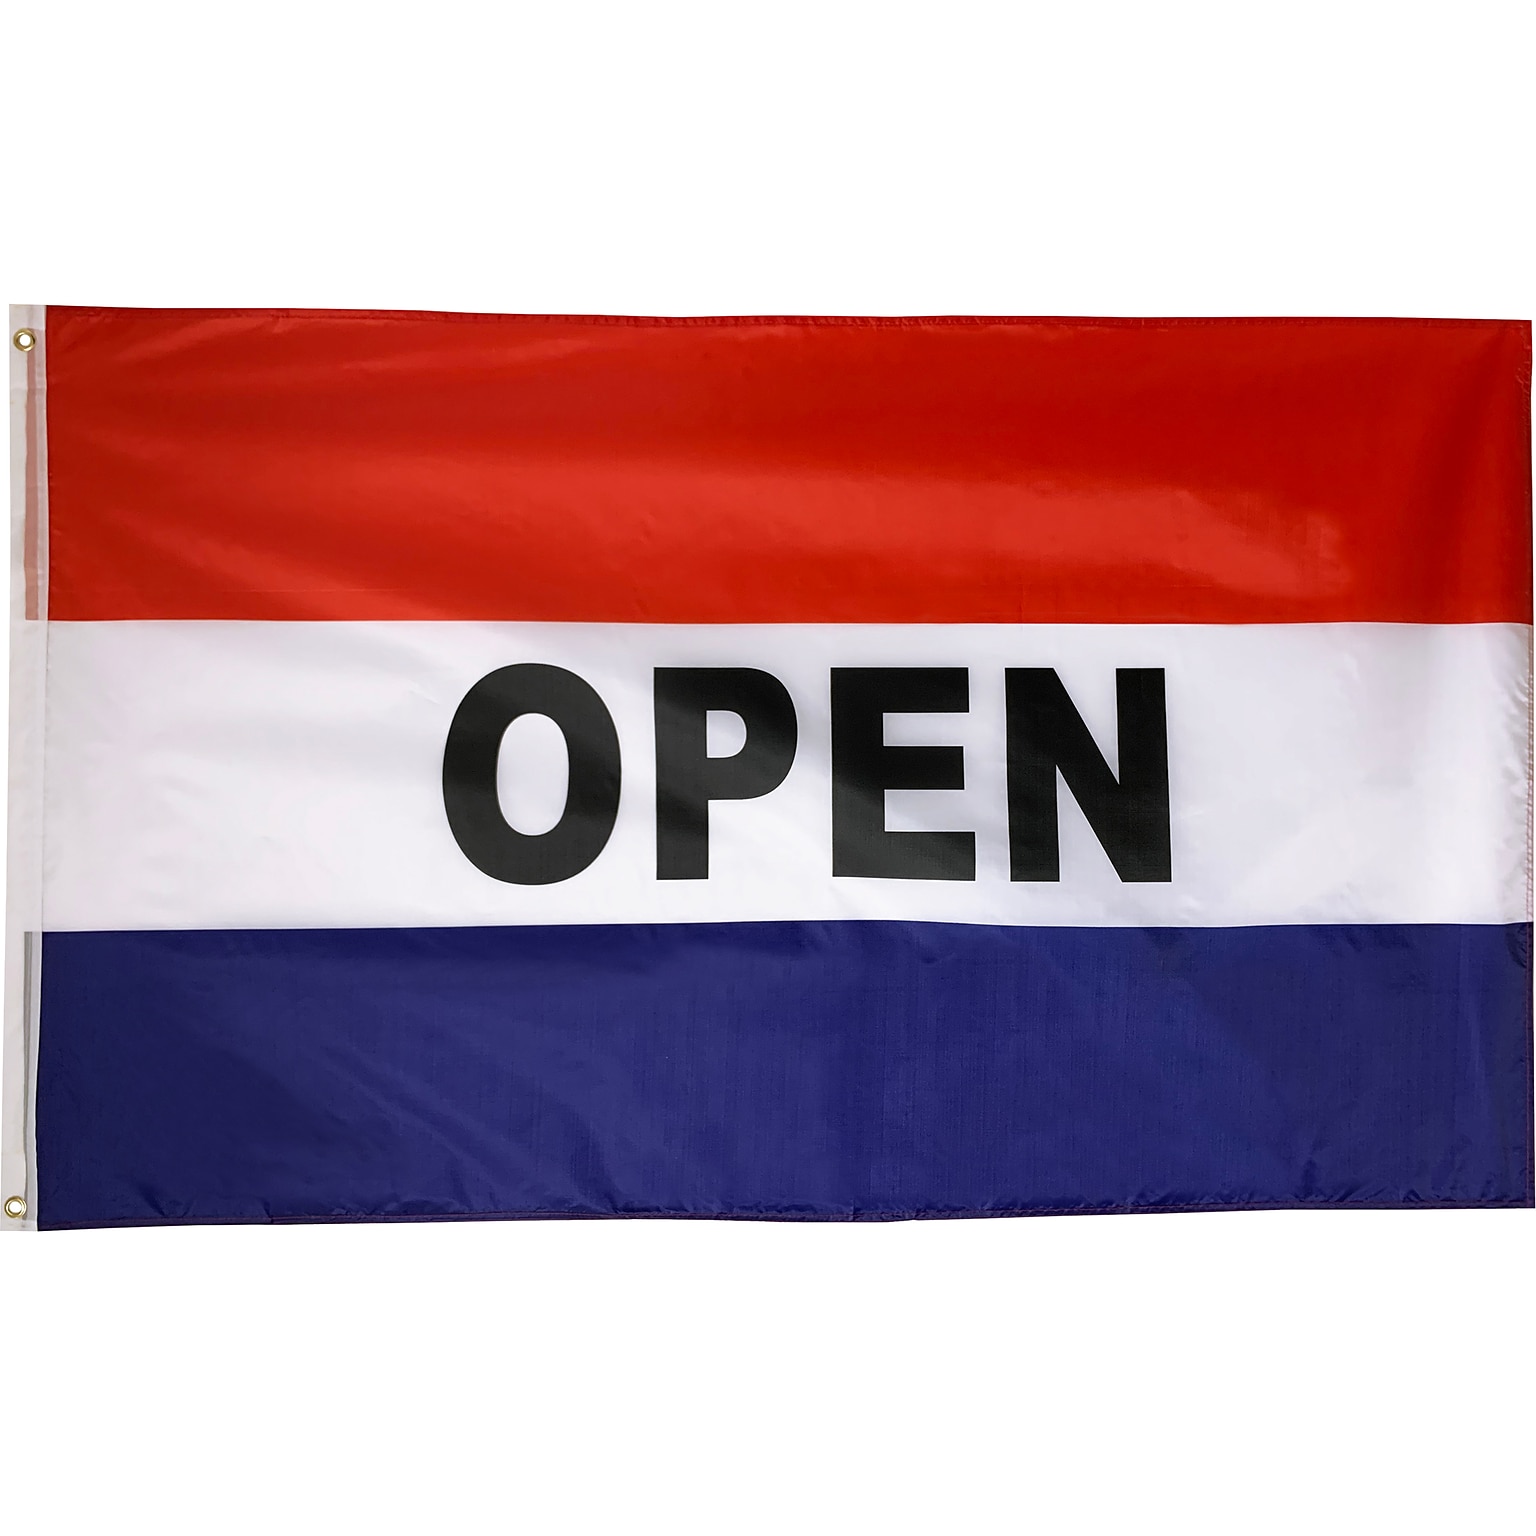 Cosco 3 x 5 OPEN Tricolor Flag, Polyester (098513)